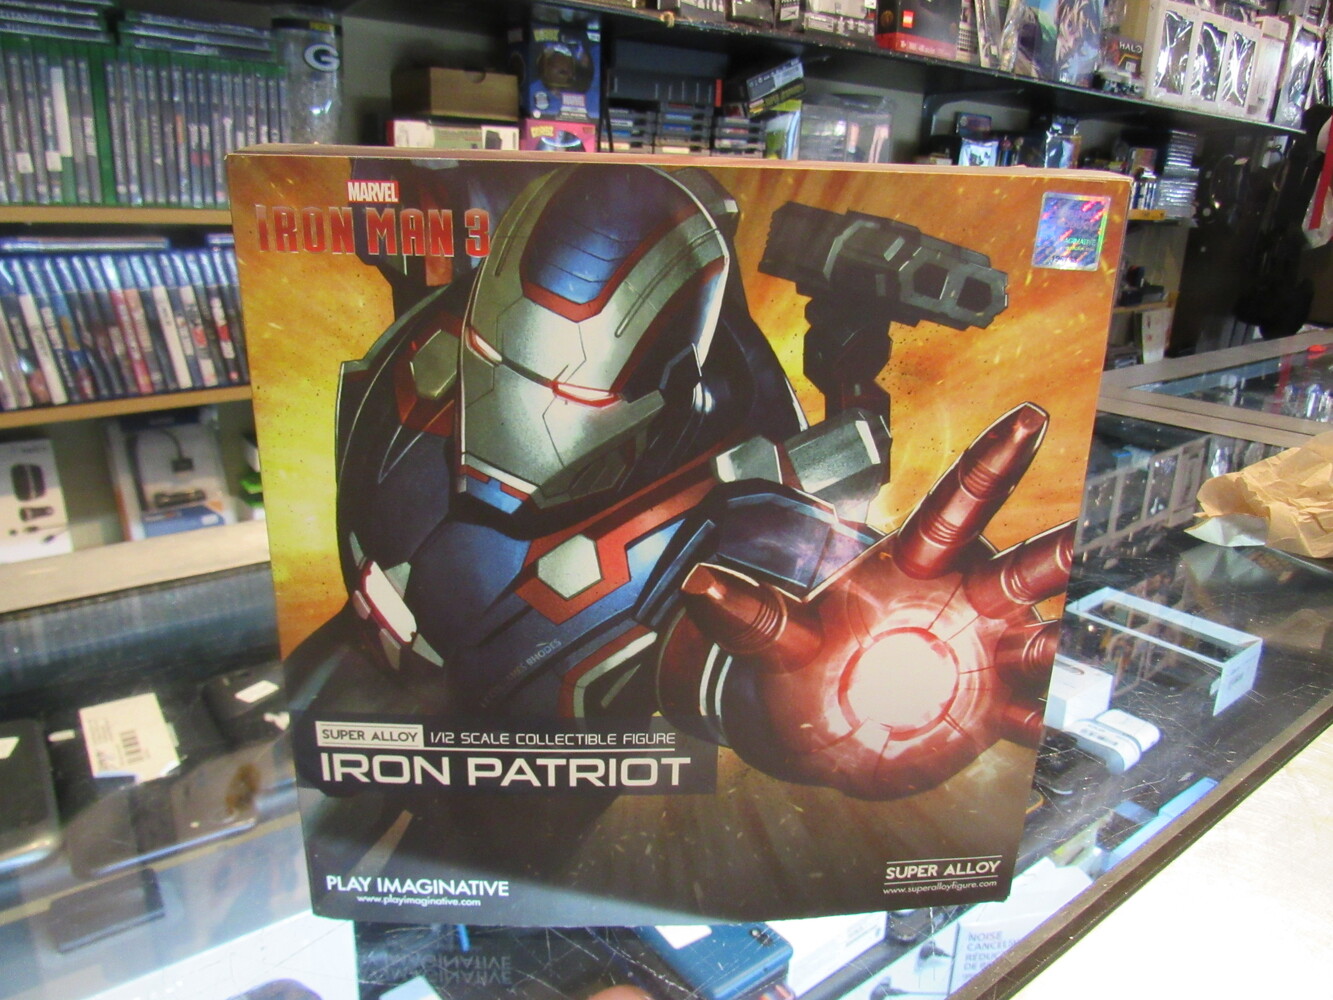 Marvel Iron Man 3: Iron Patriot Figure